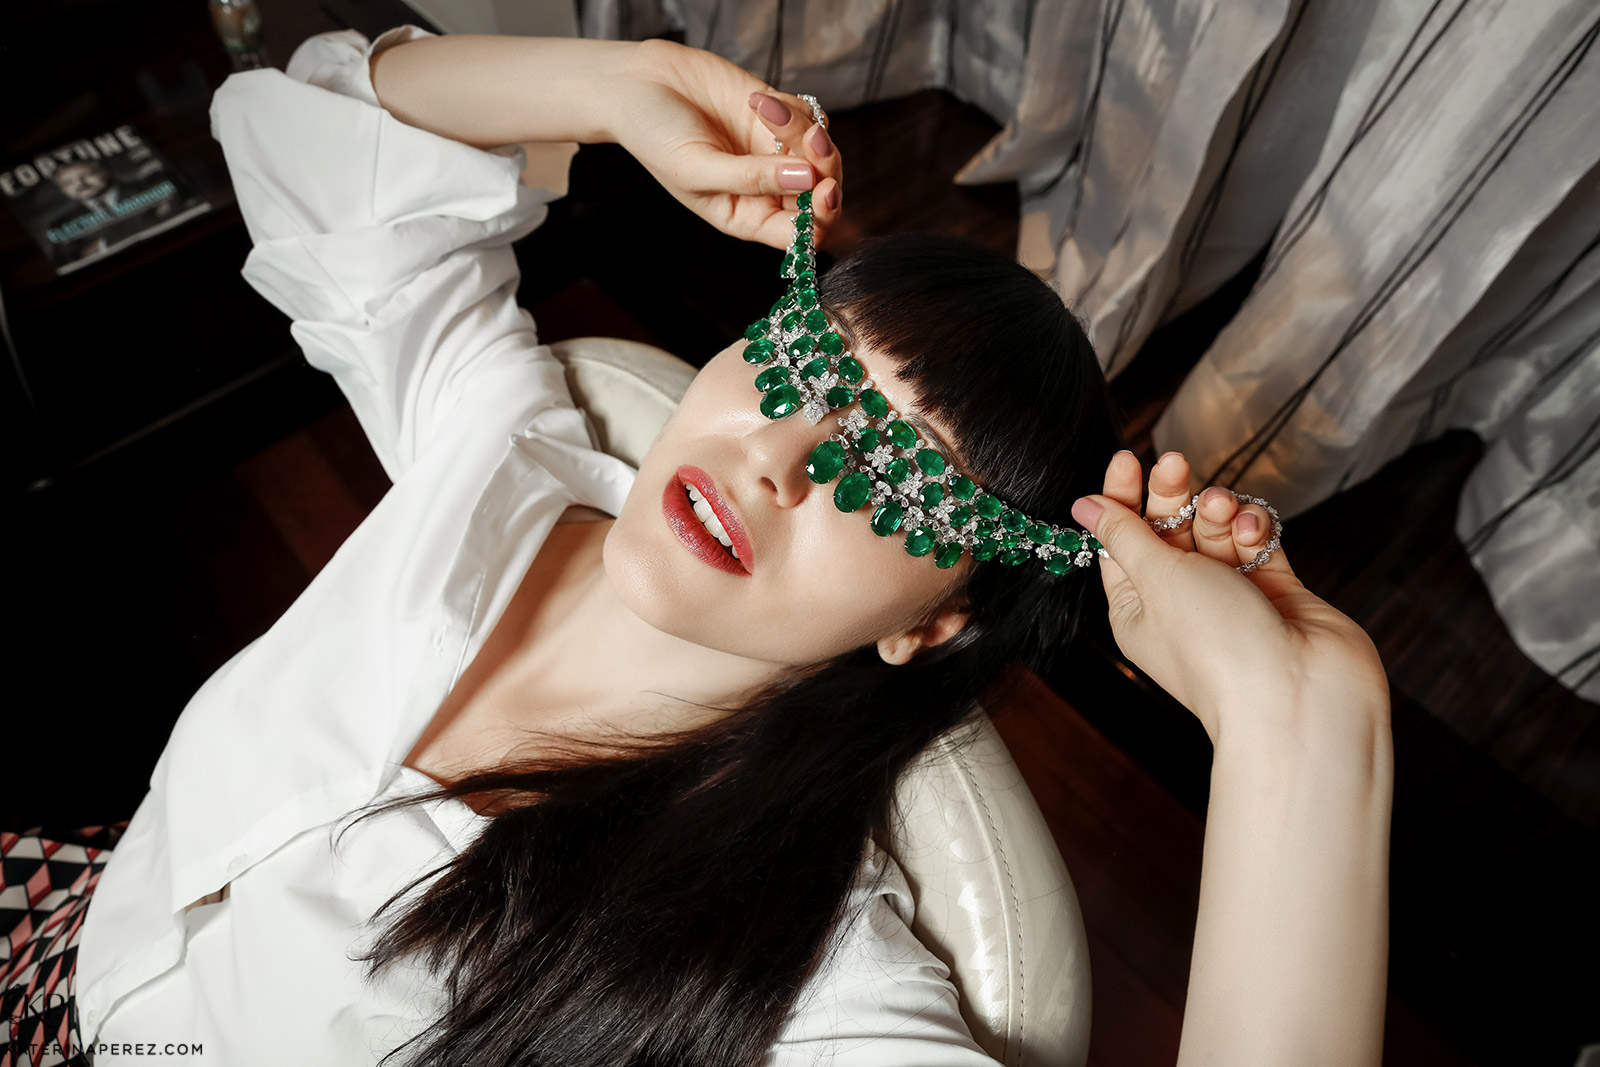 Katerina with a Kamyen emerald and diamond necklace